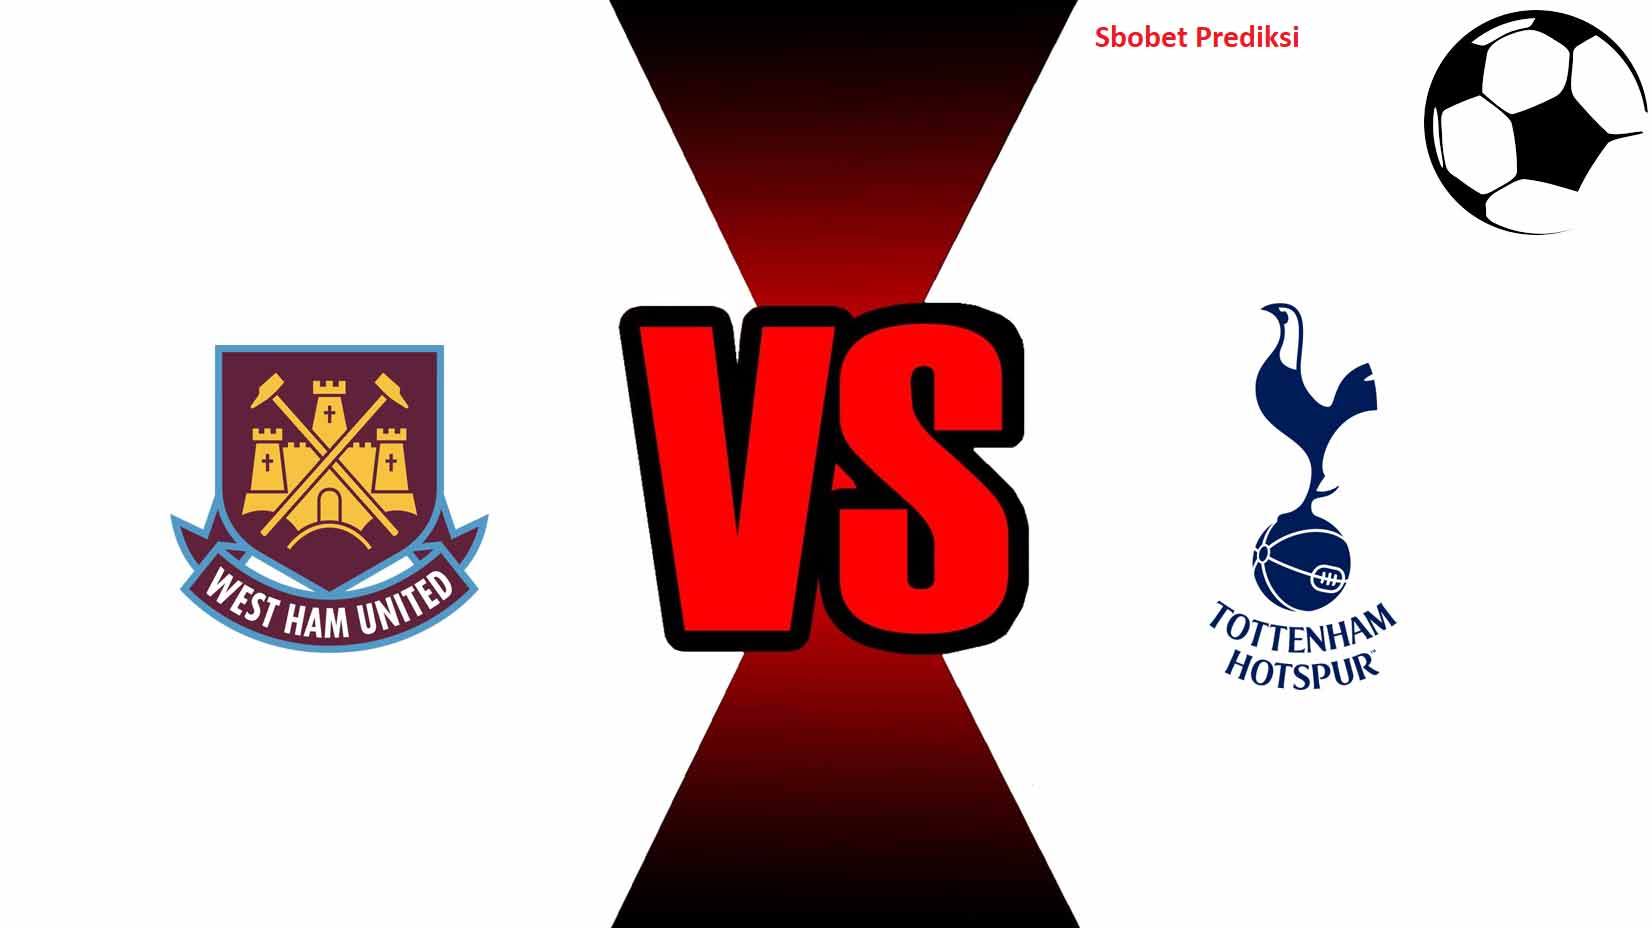 Prediksi Skor Bola Online West Ham United VS Tottenham Hotspur 20 Oktober 2018